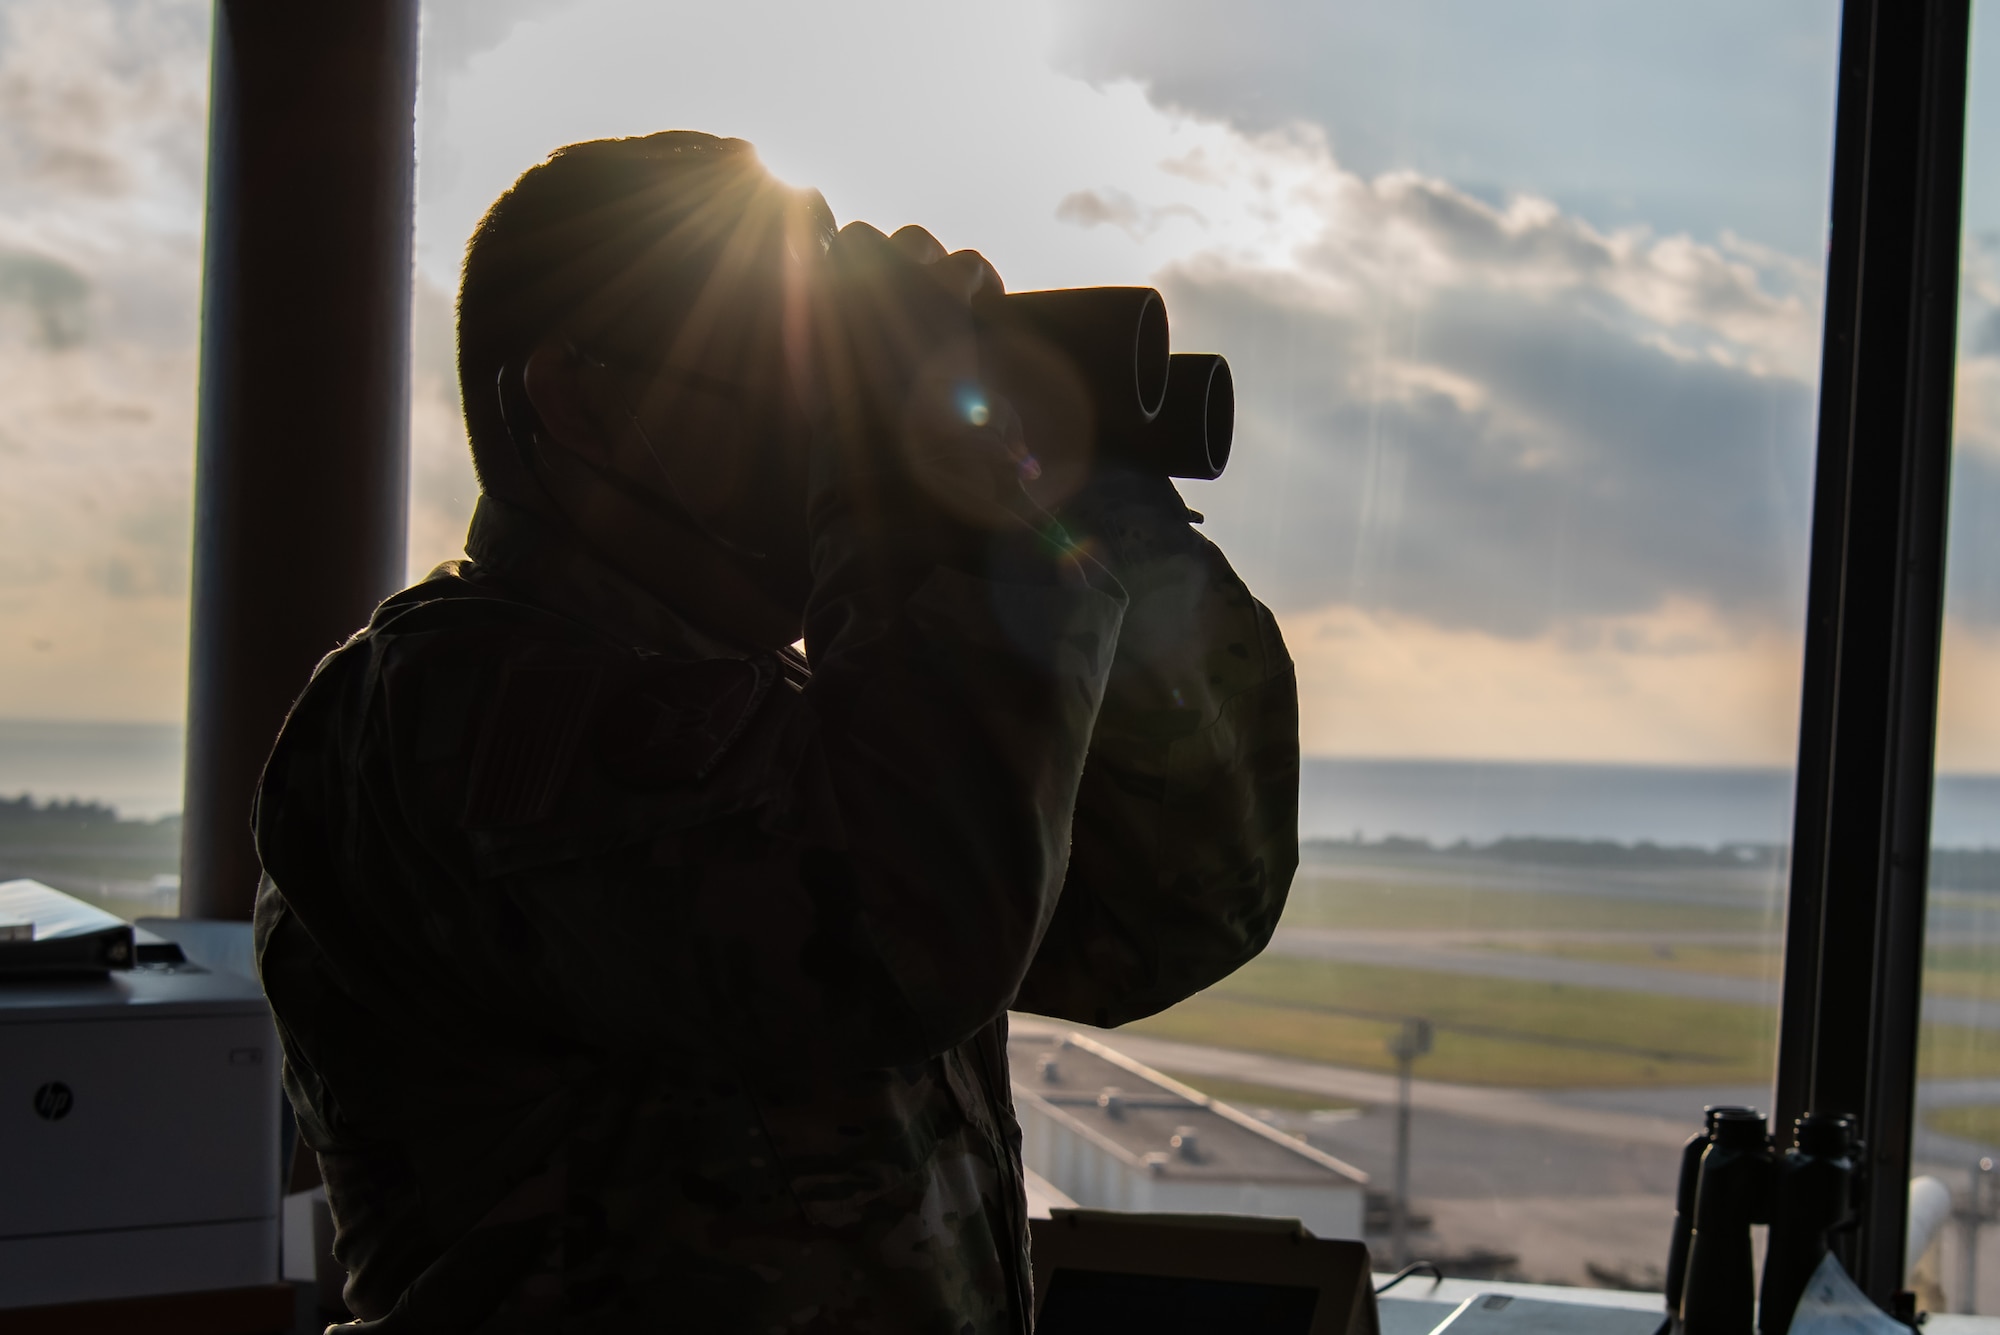 An Airman uses binoculars to scan the flightline.